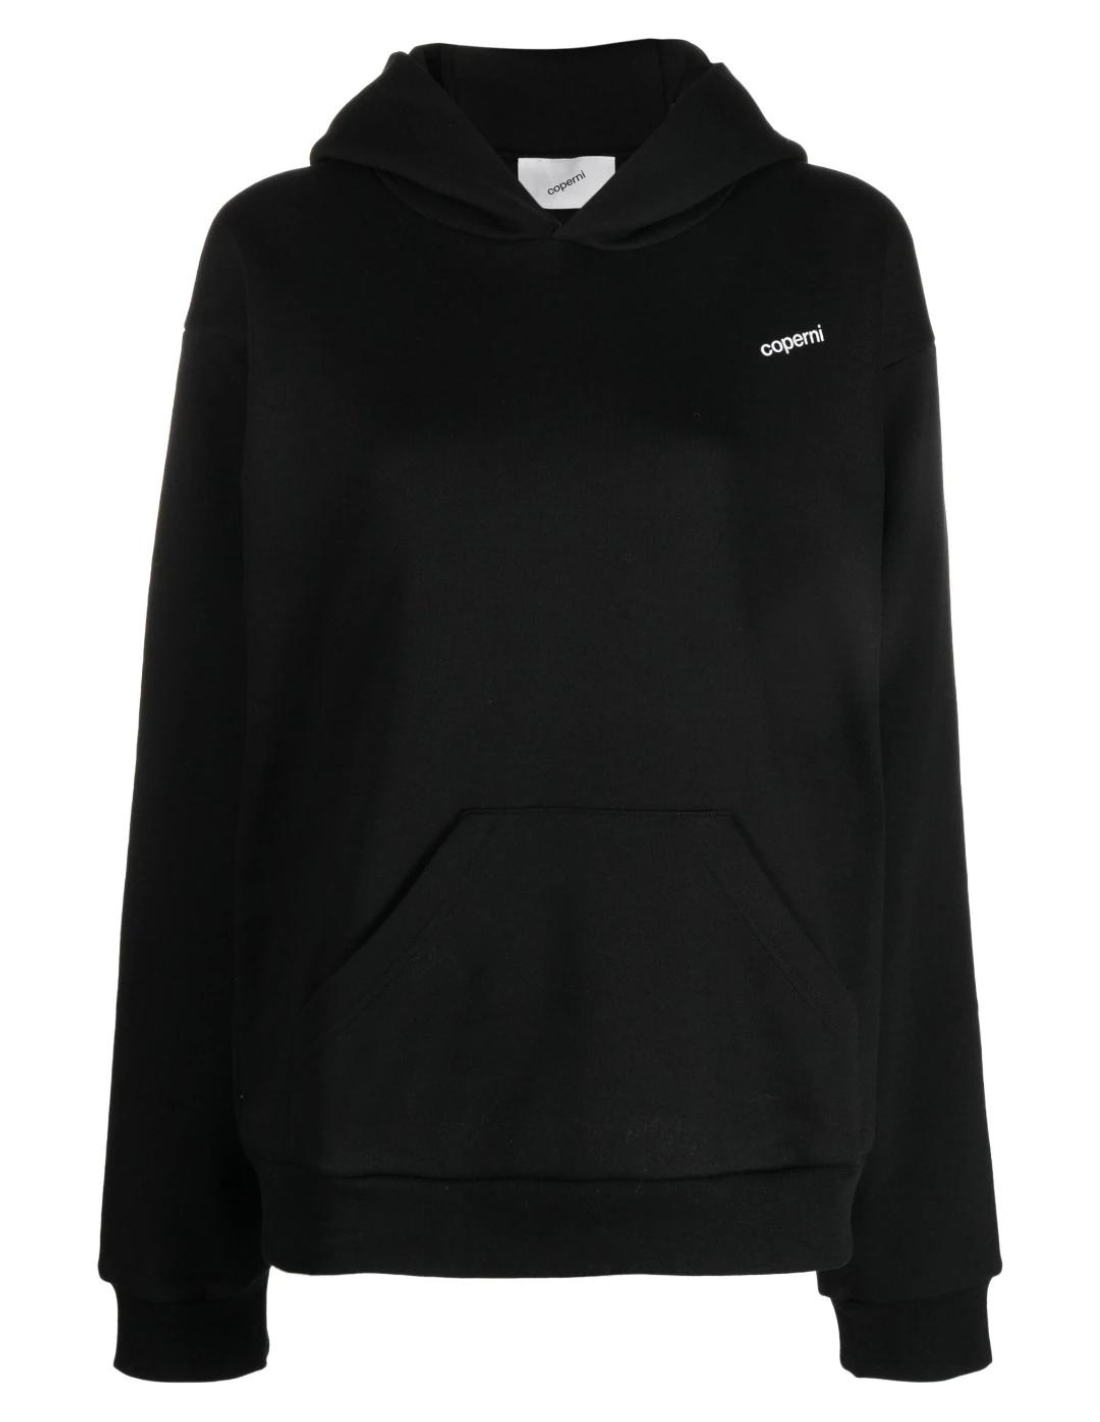 Coperni logo black hoodie - black